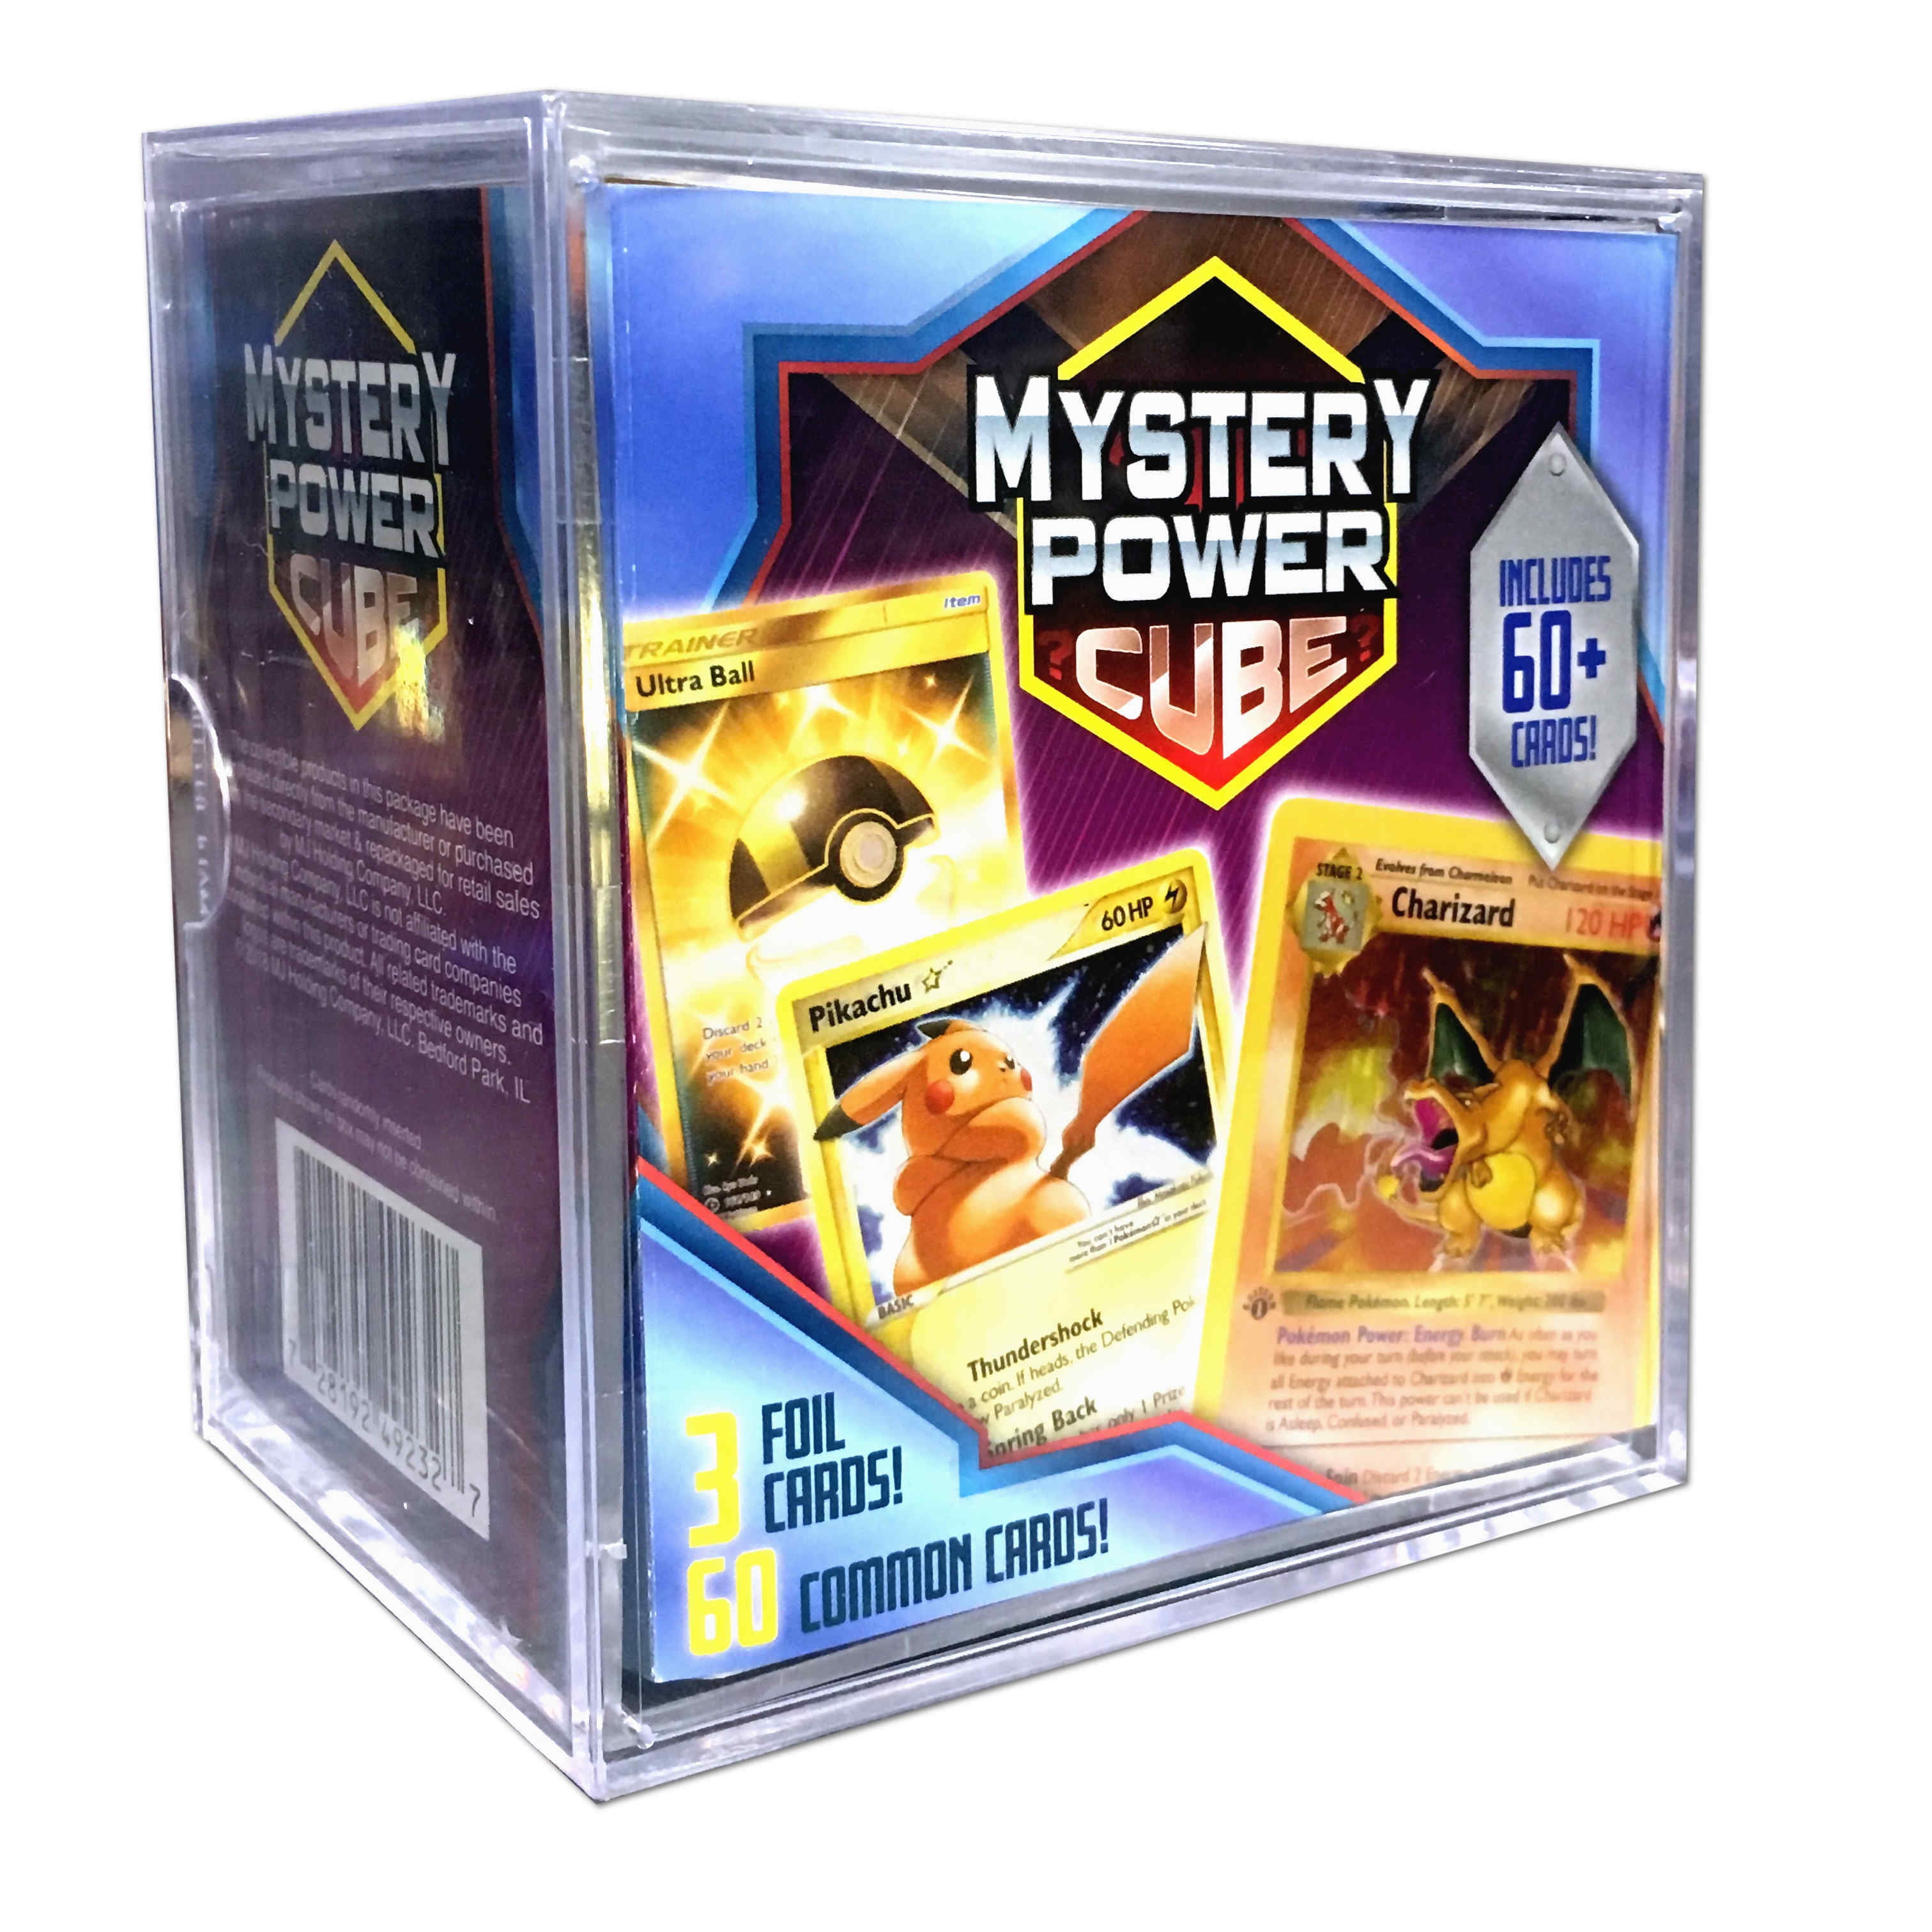 VINTAGE?? Sealed NEW POKEMON TCG Mystery Power Cube 60 COMMON 3 FOIL 